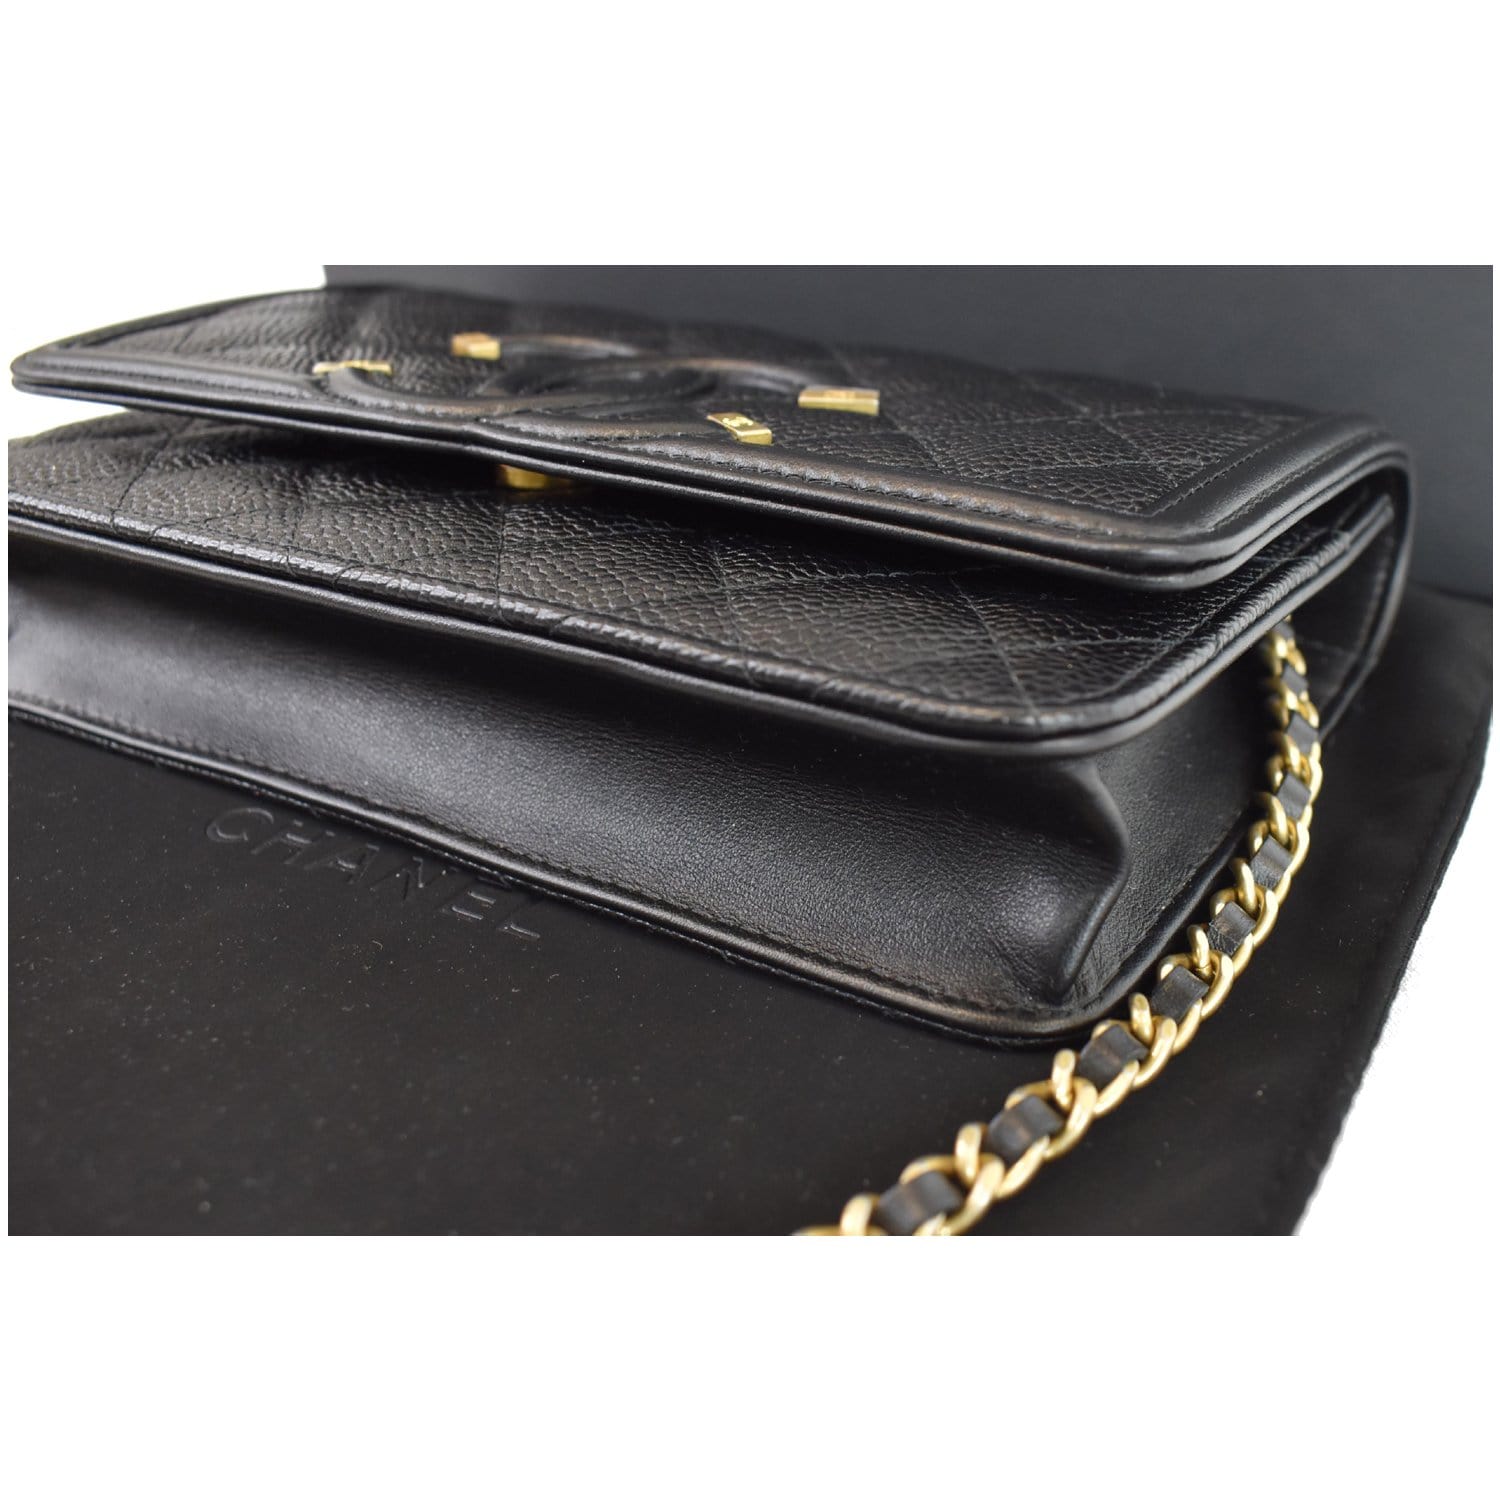 chanel wallet on chain chanel wallet on chain price chanel wallet